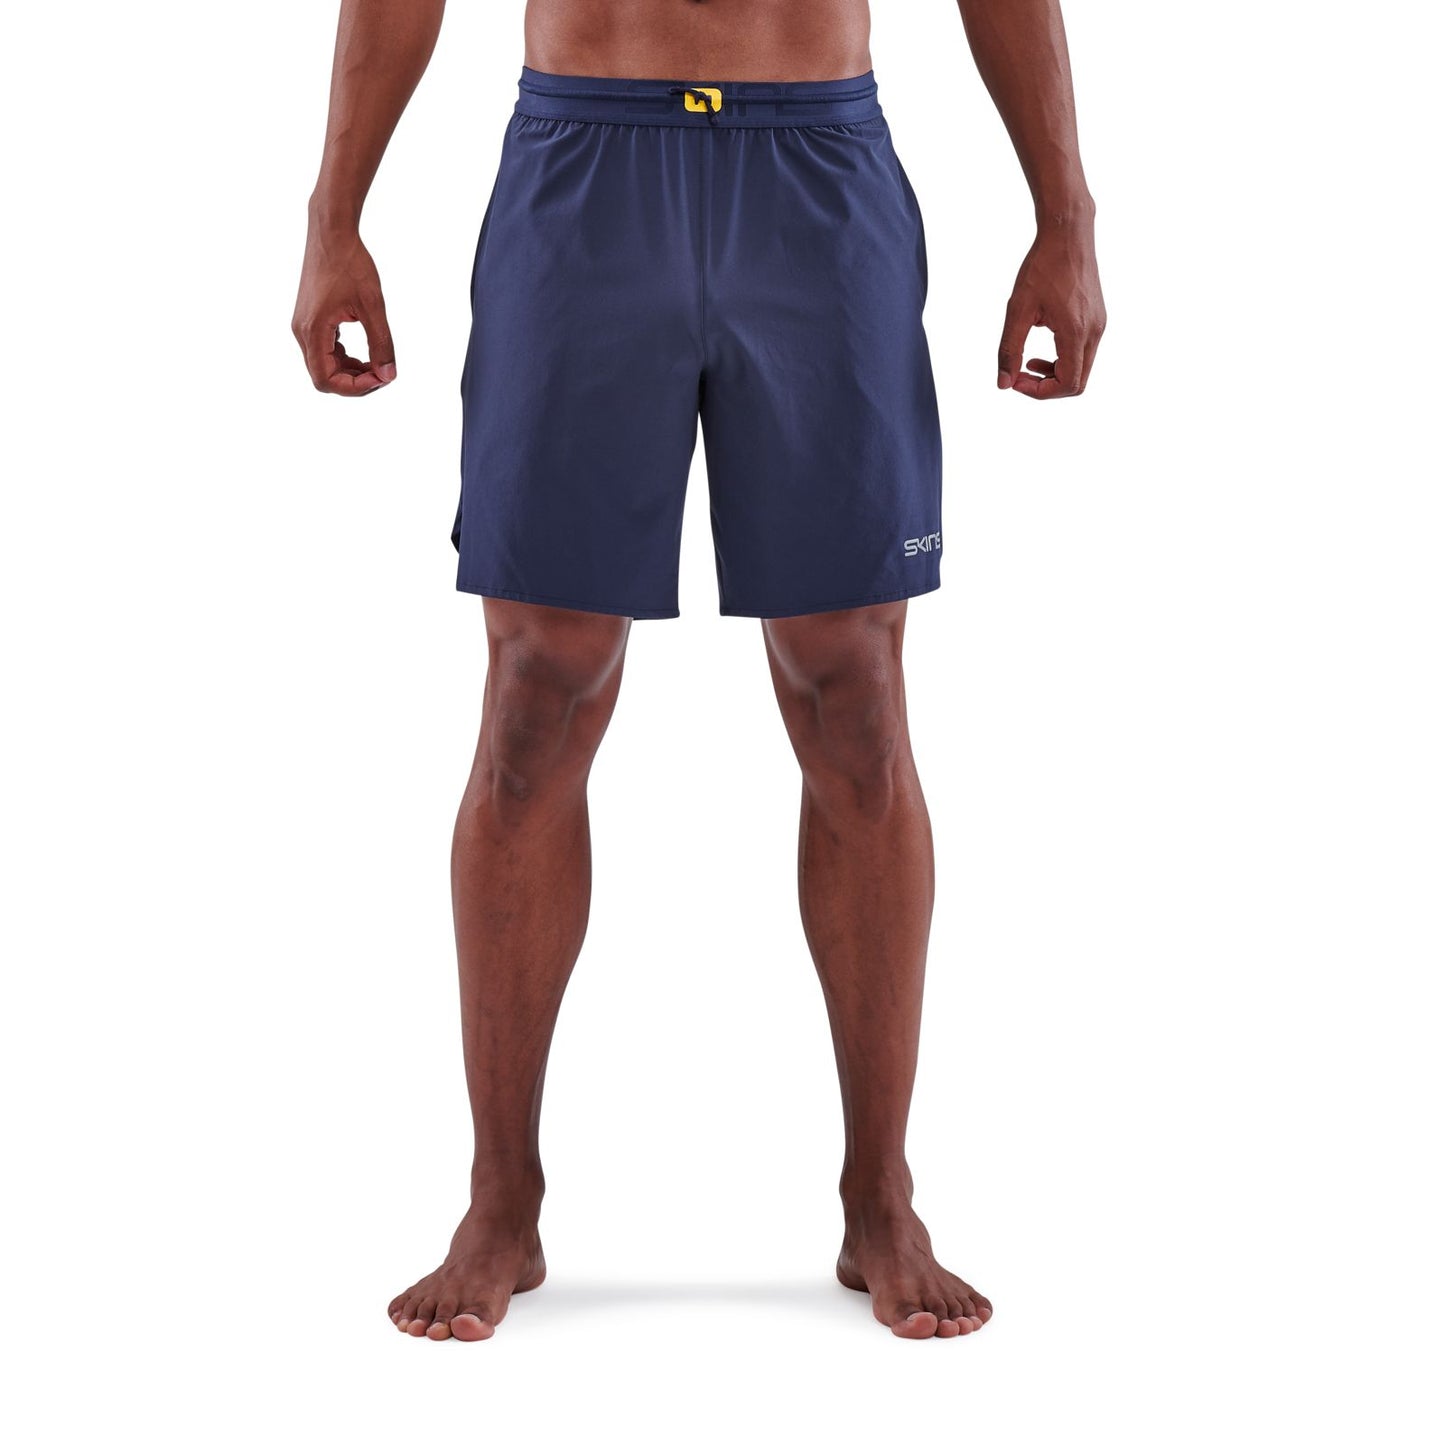 Skins Series-3 X-Fit Men's Shorts